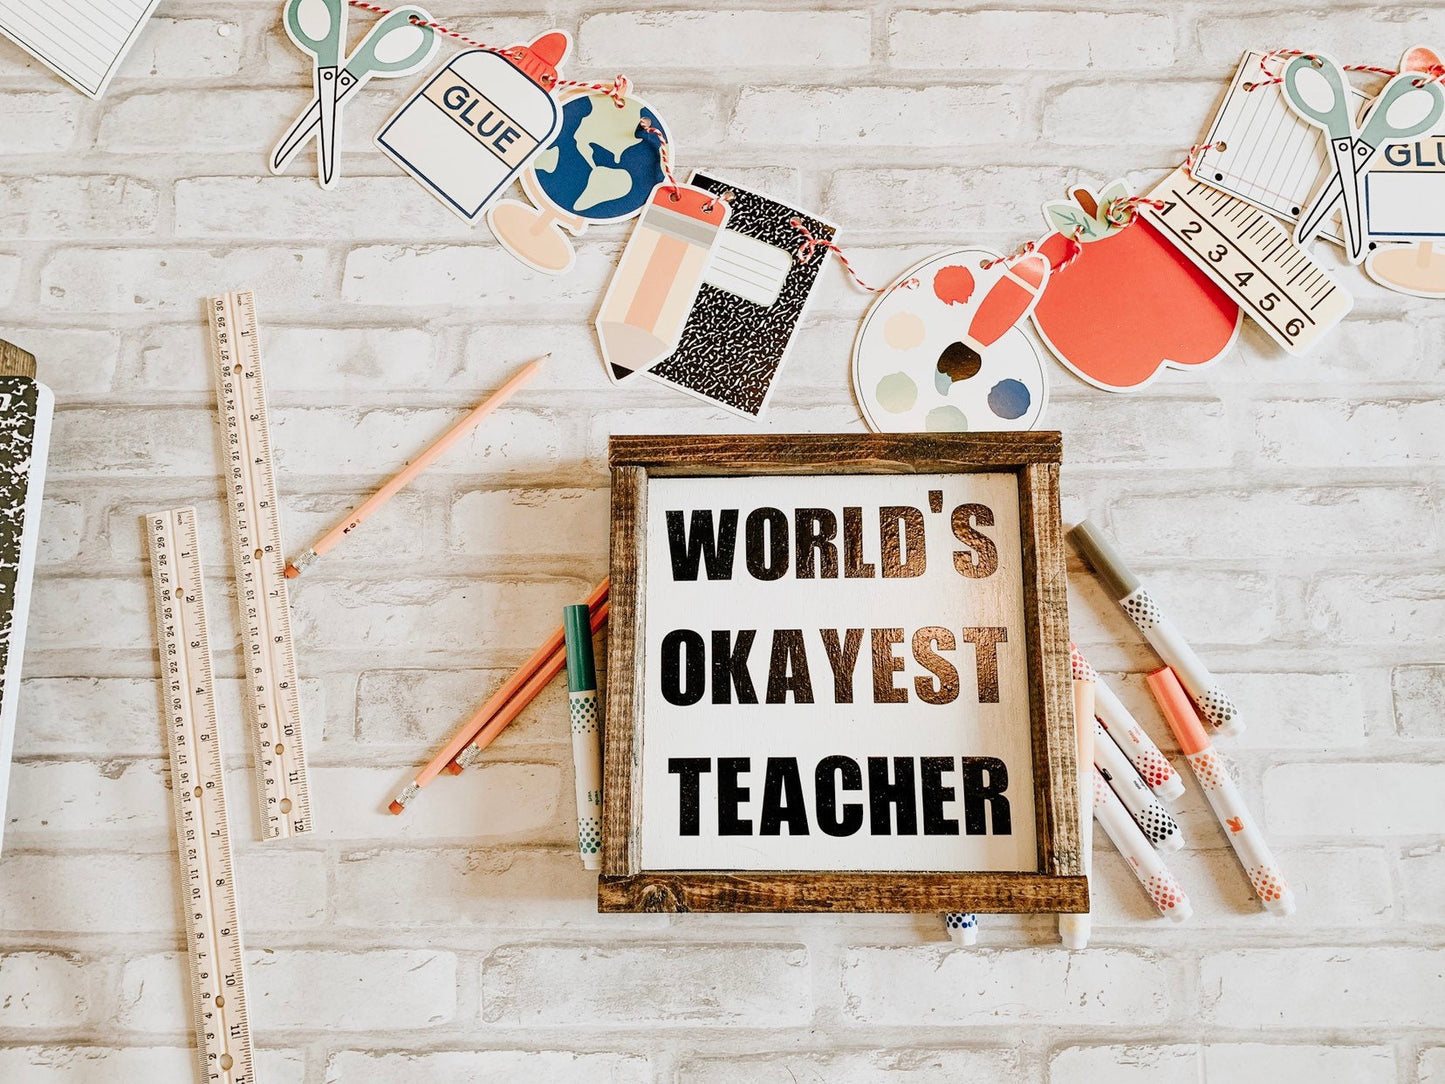 World's Okayest Teacher sign